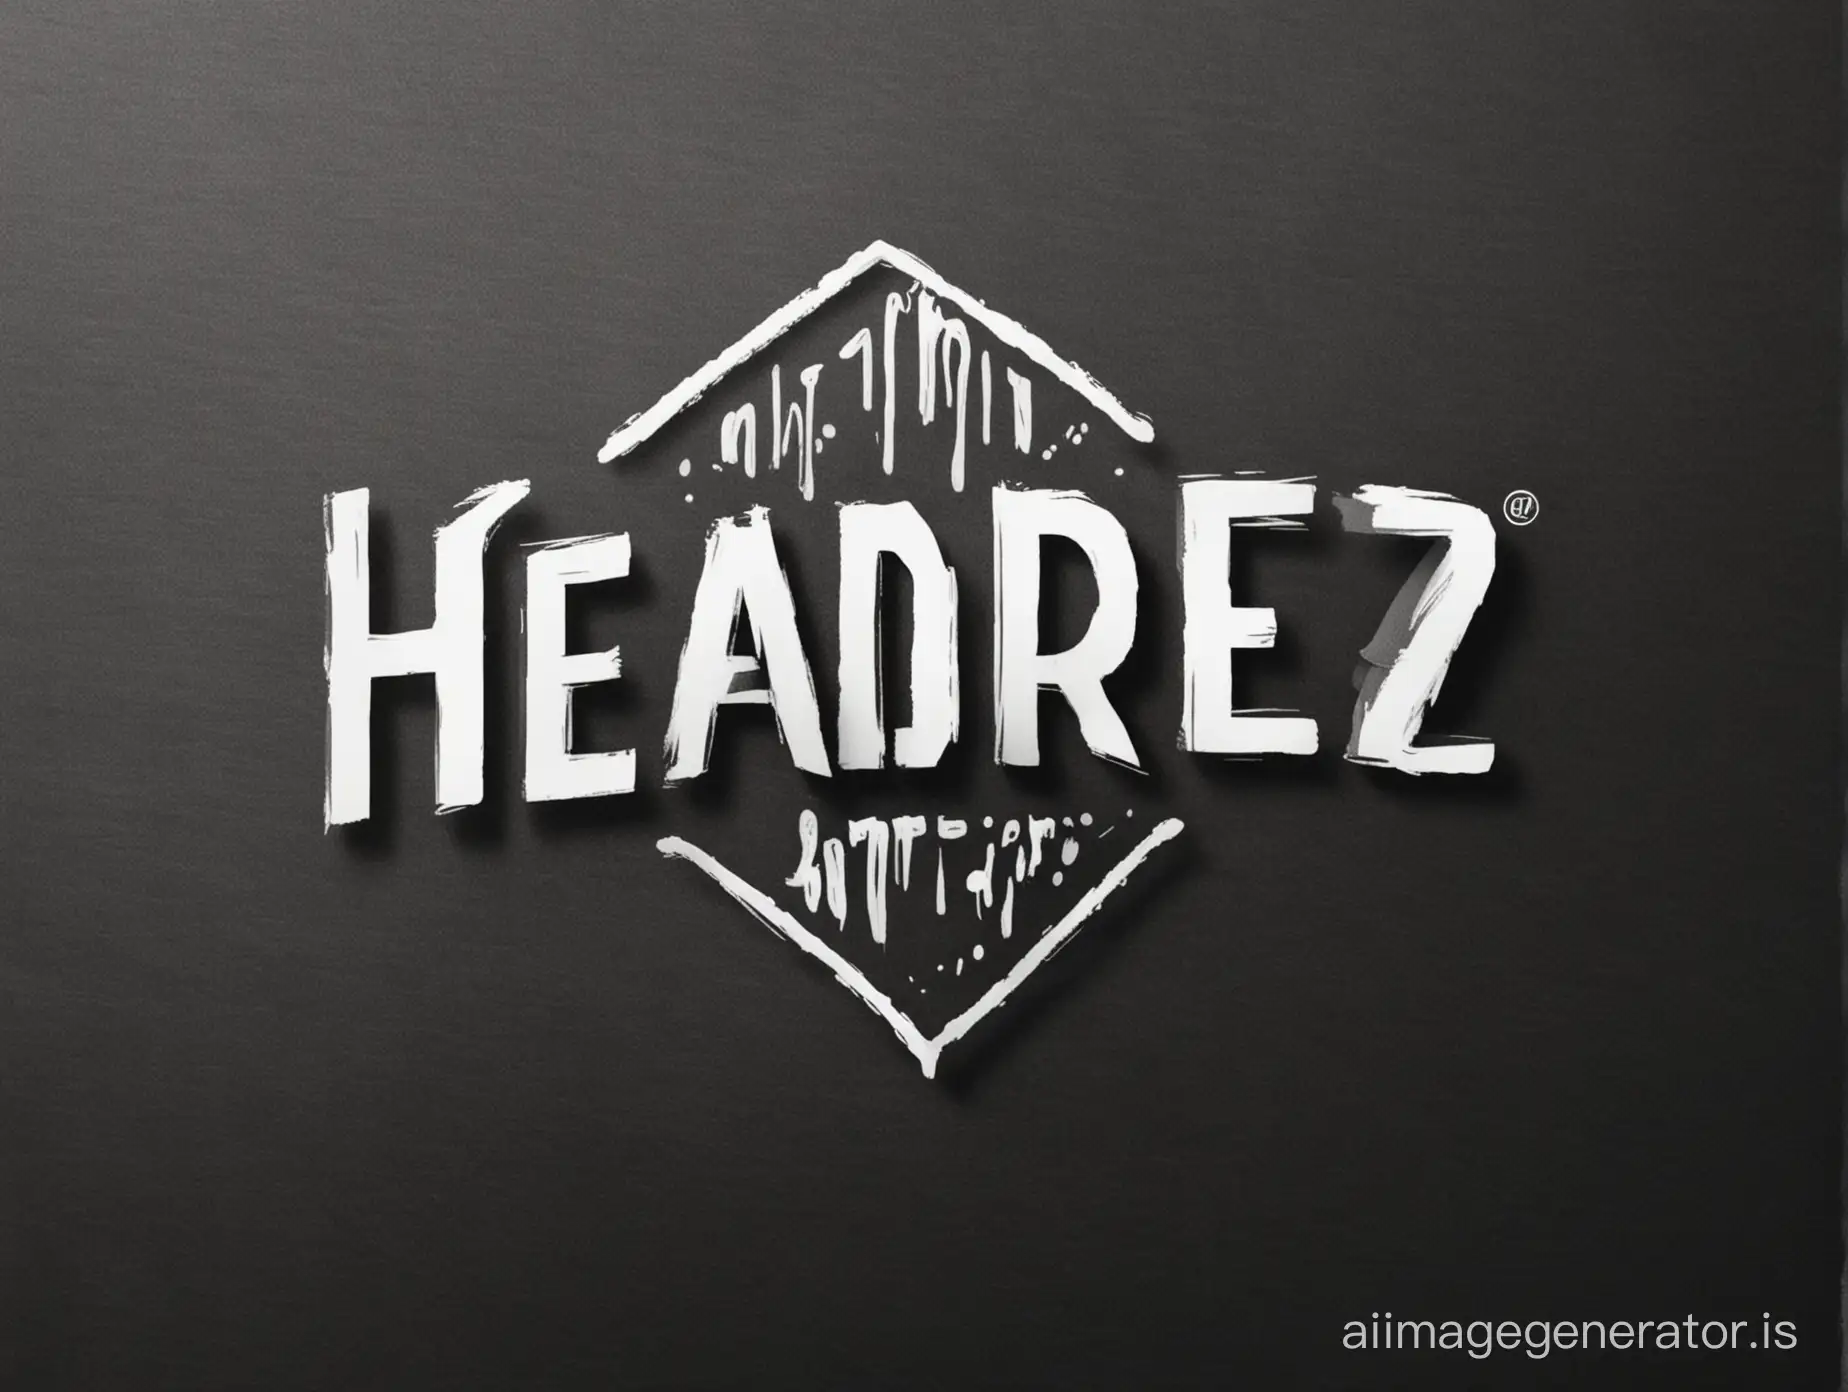 Vibrant-HeadRez-Logo-Design-with-Abstract-Geometric-Elements